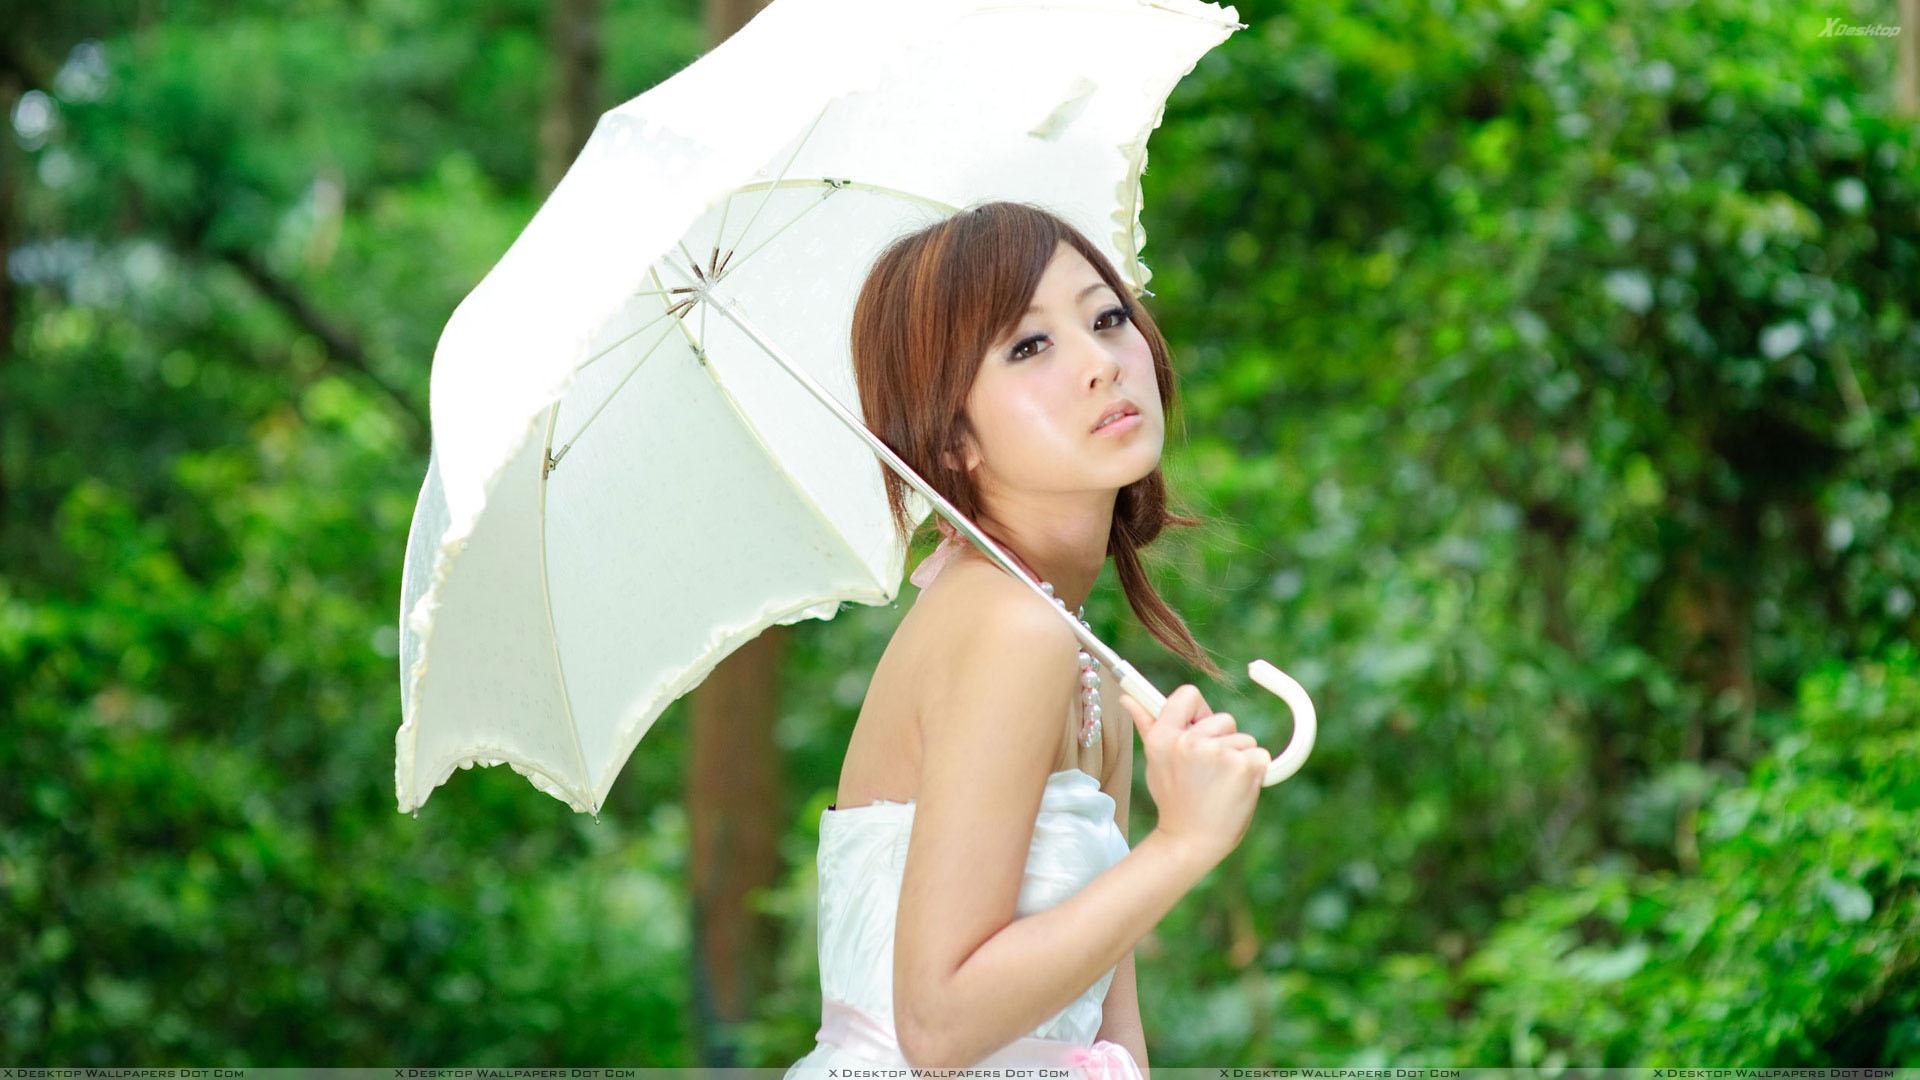 Asian Girl Thinking With White Umbrella in Green Garden Wallpaper